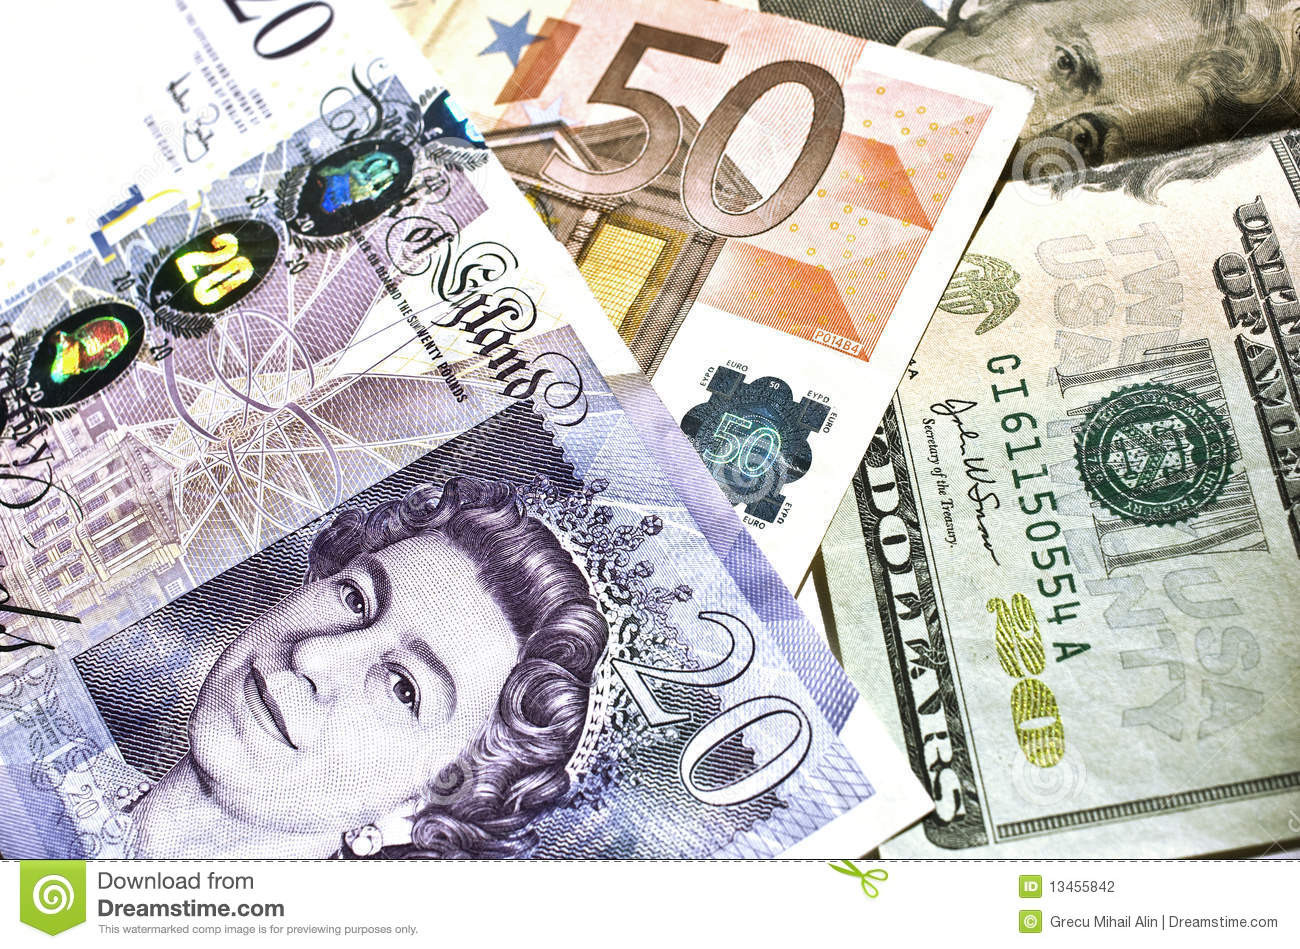 euro-dollar-pound-13455842.jpg